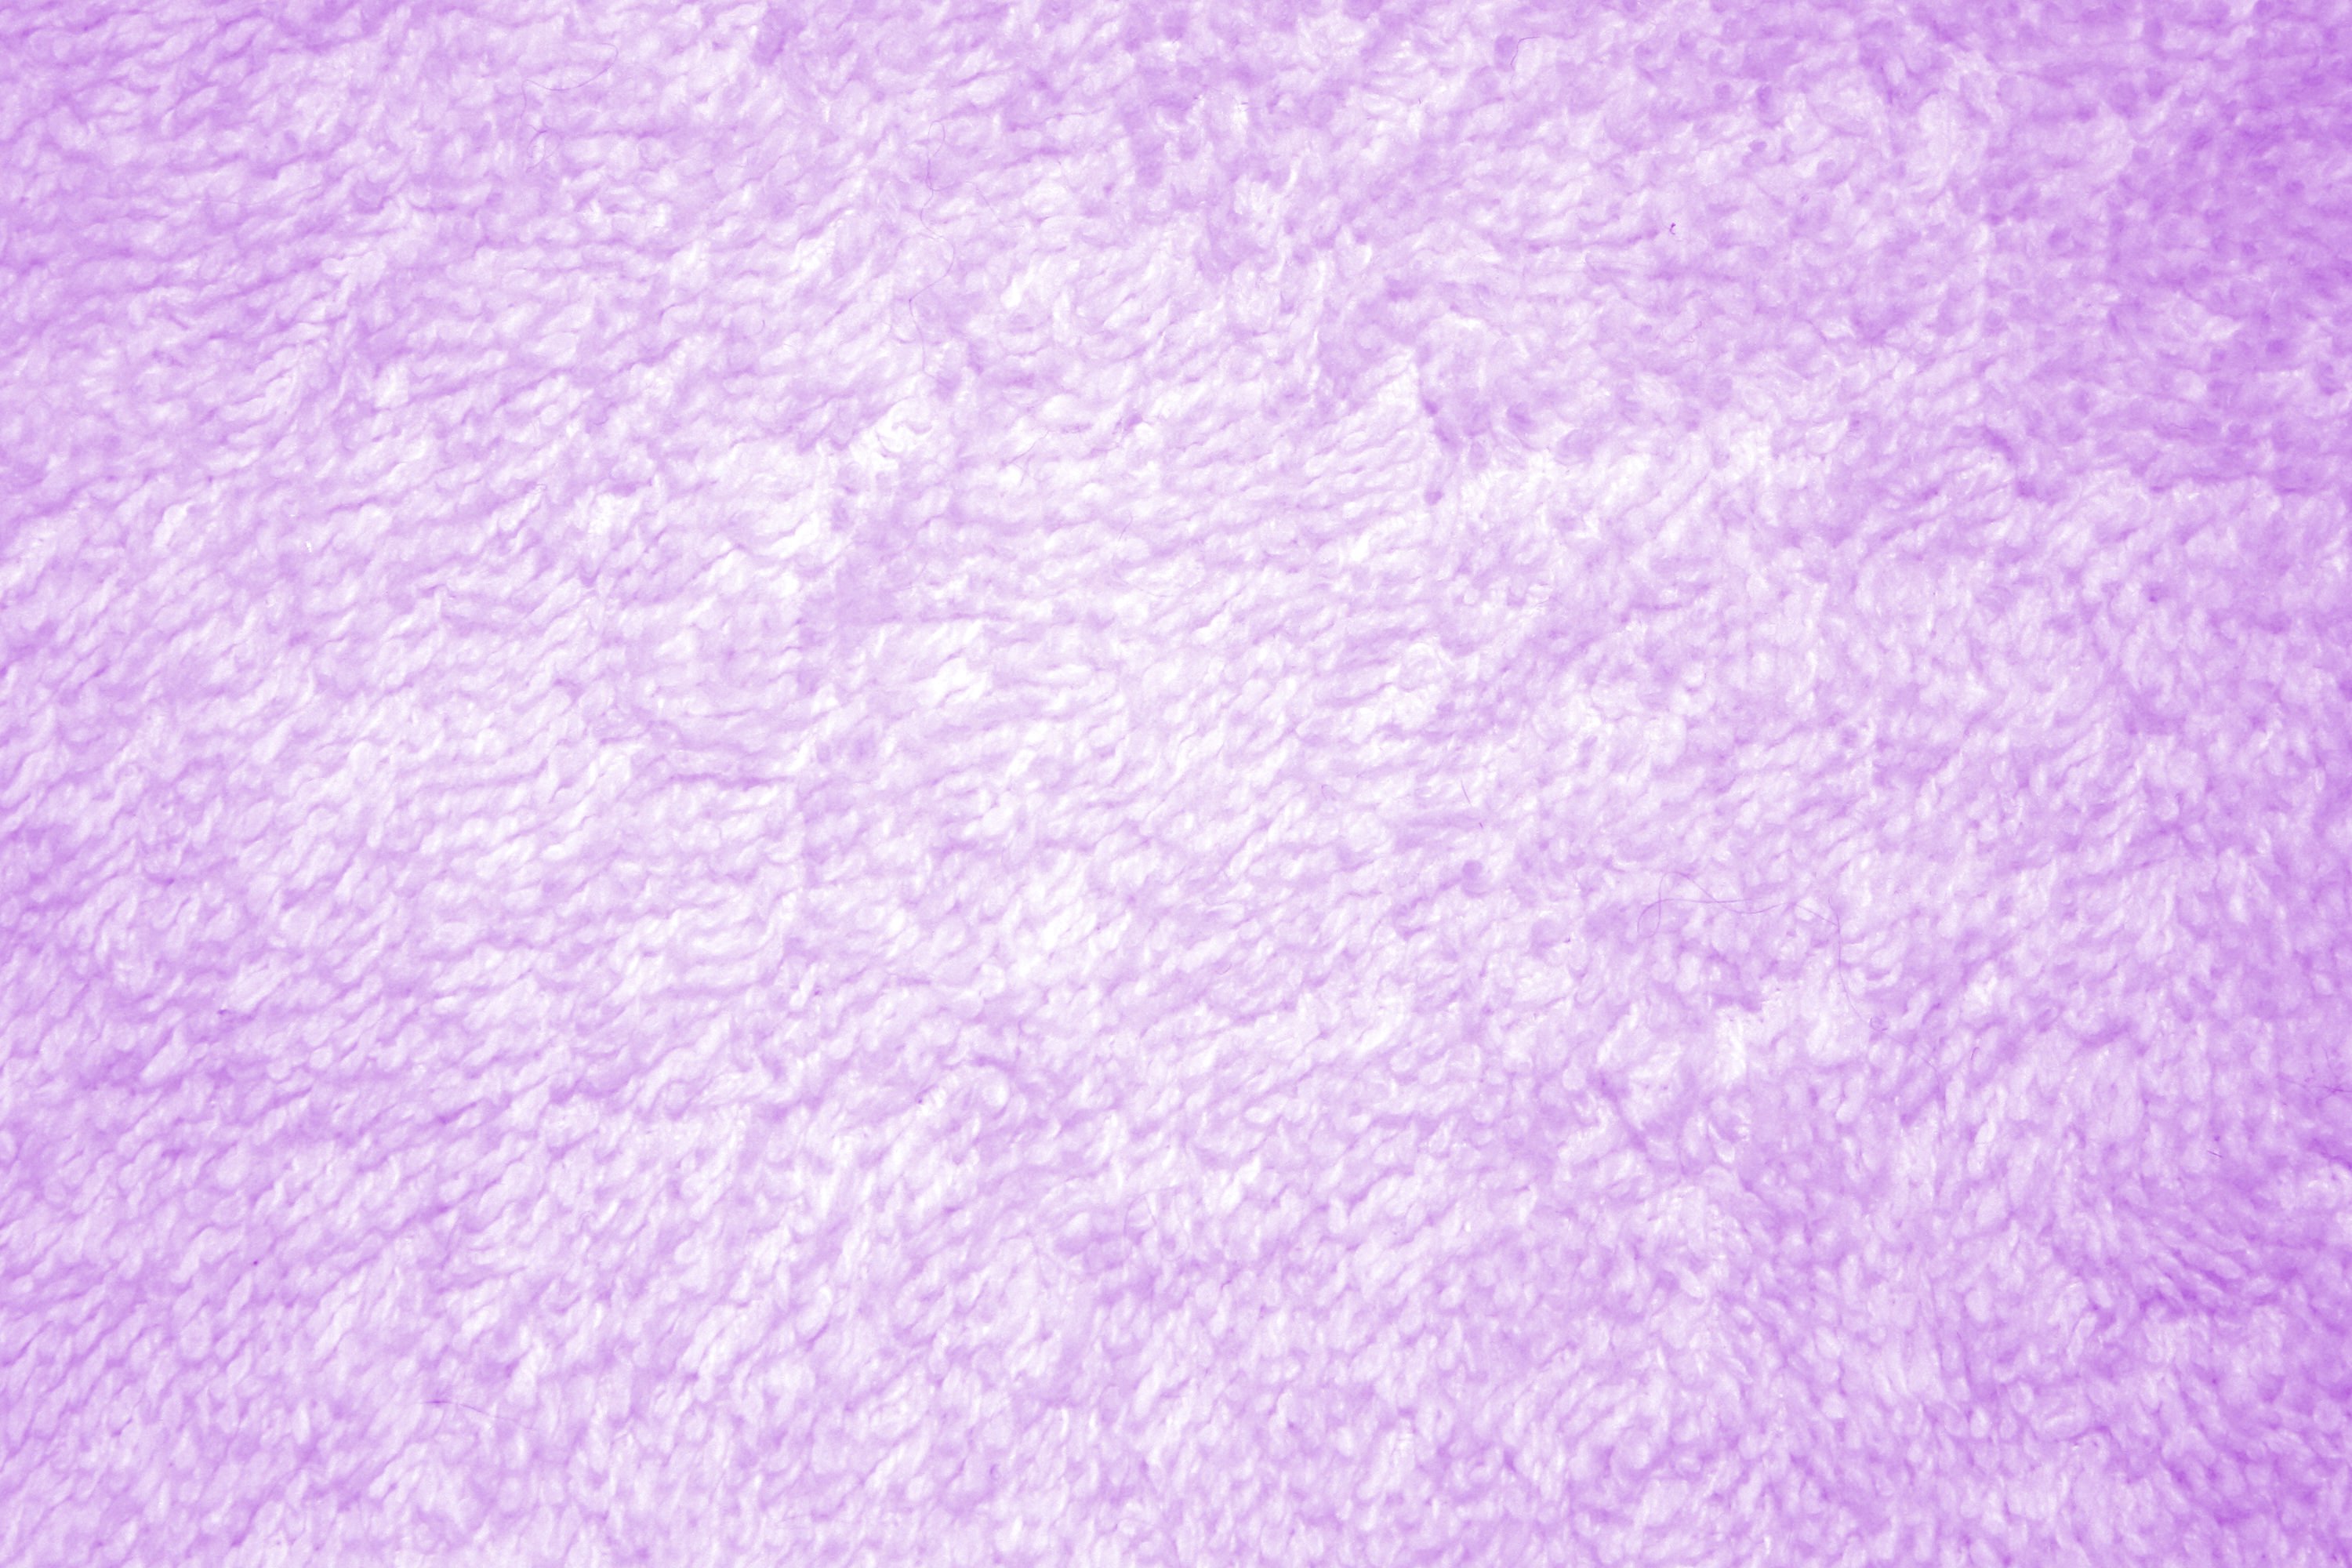 Purple Terry Cloth Texture Picture | Free Photograph | Photos Public Domain